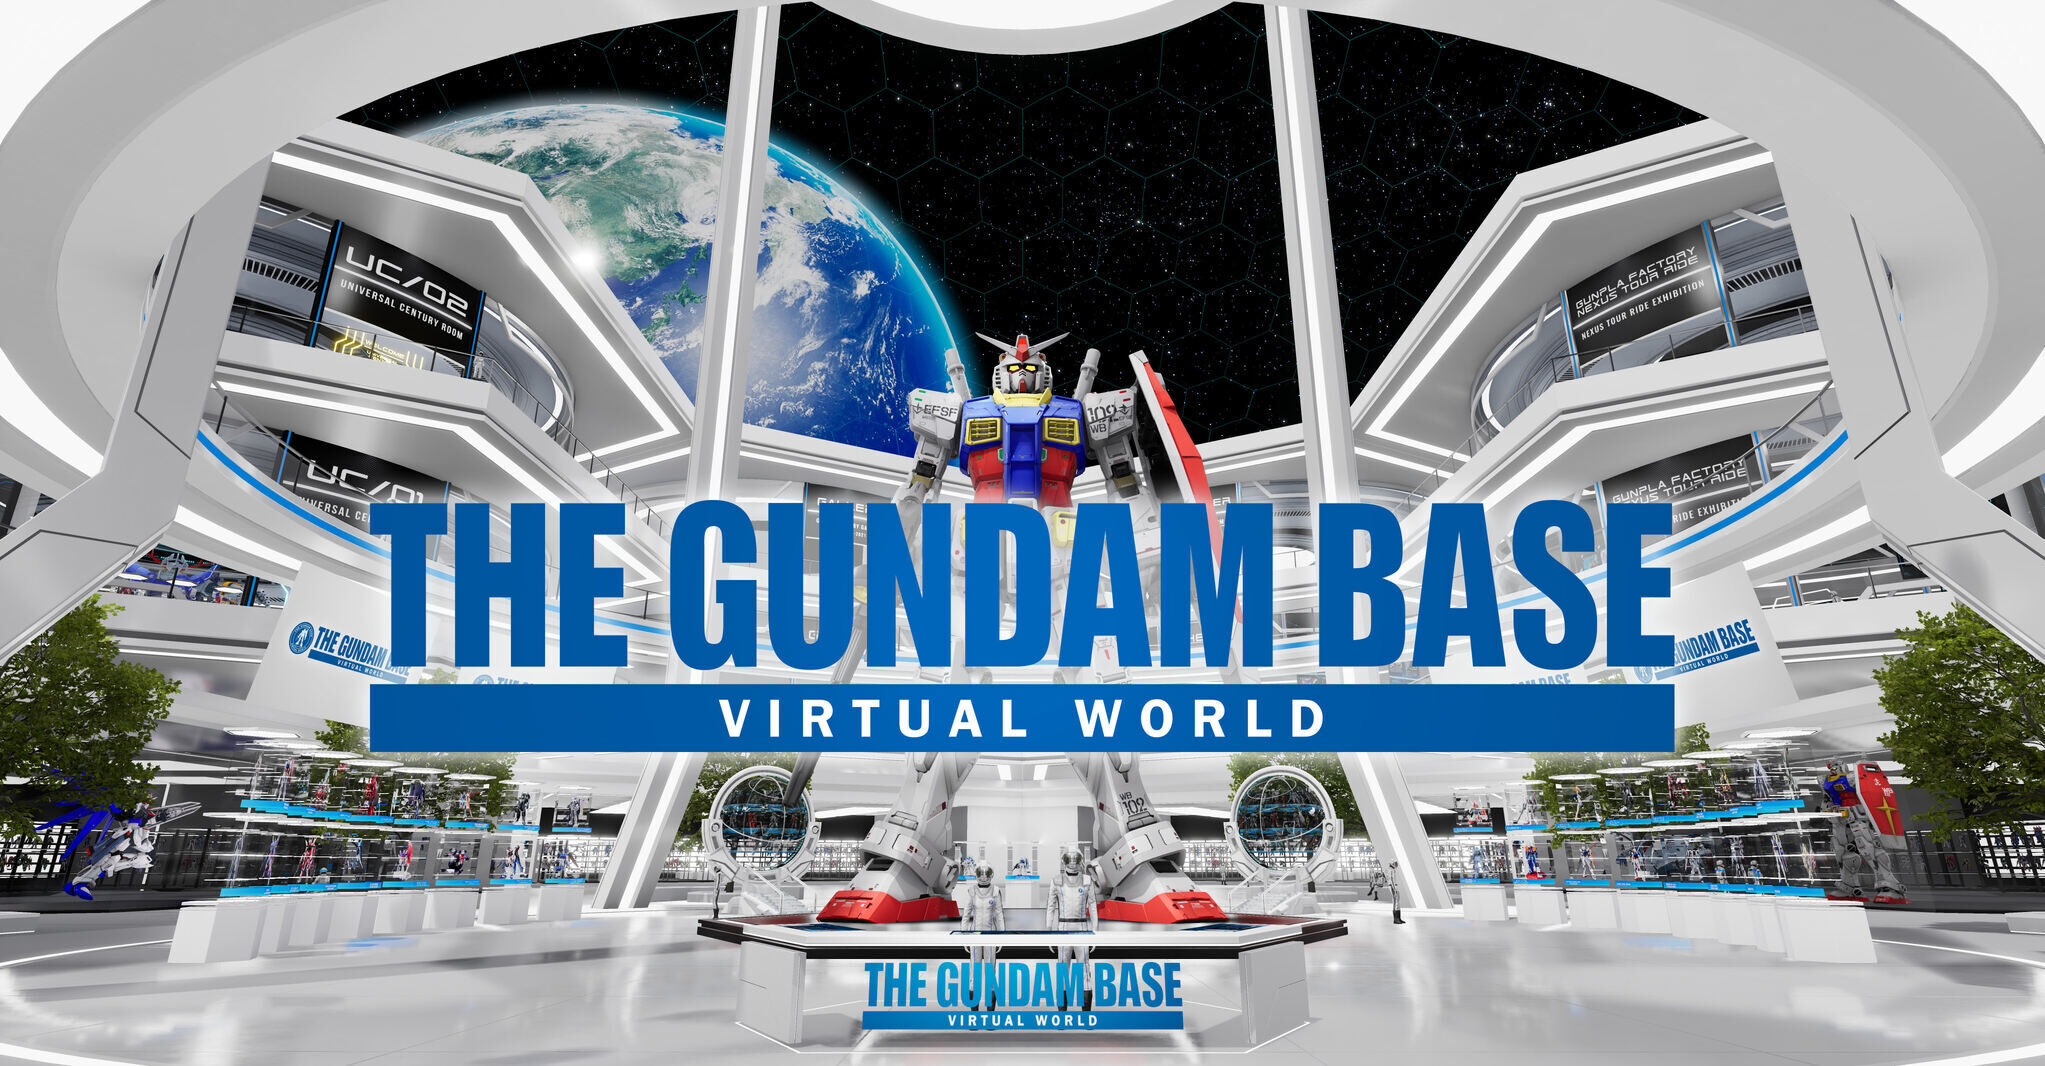 Announcing The Gundam Metaverse Project Bunnygaming Com